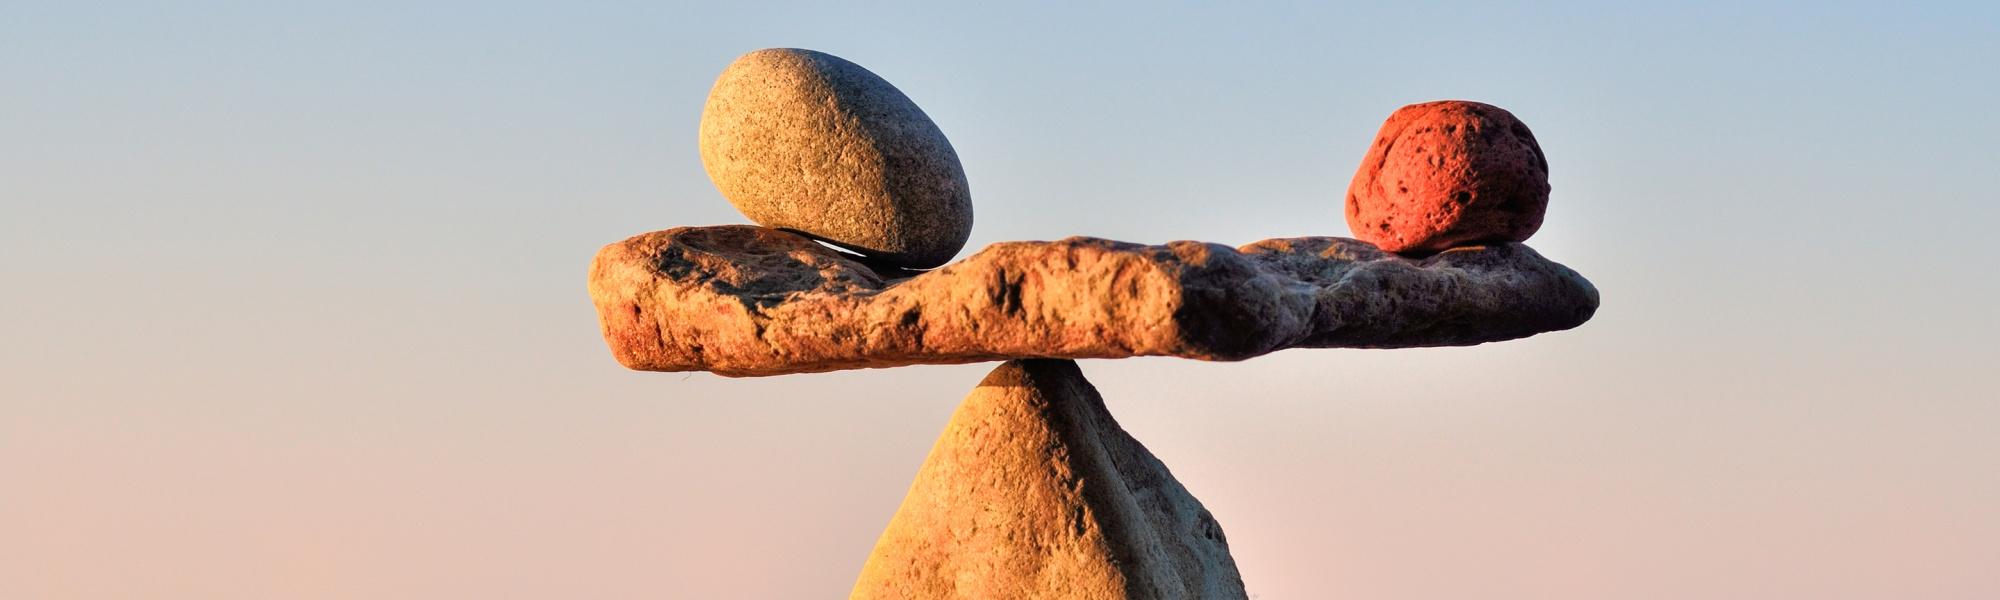 Image shows a sculpture made of balancing rocks.